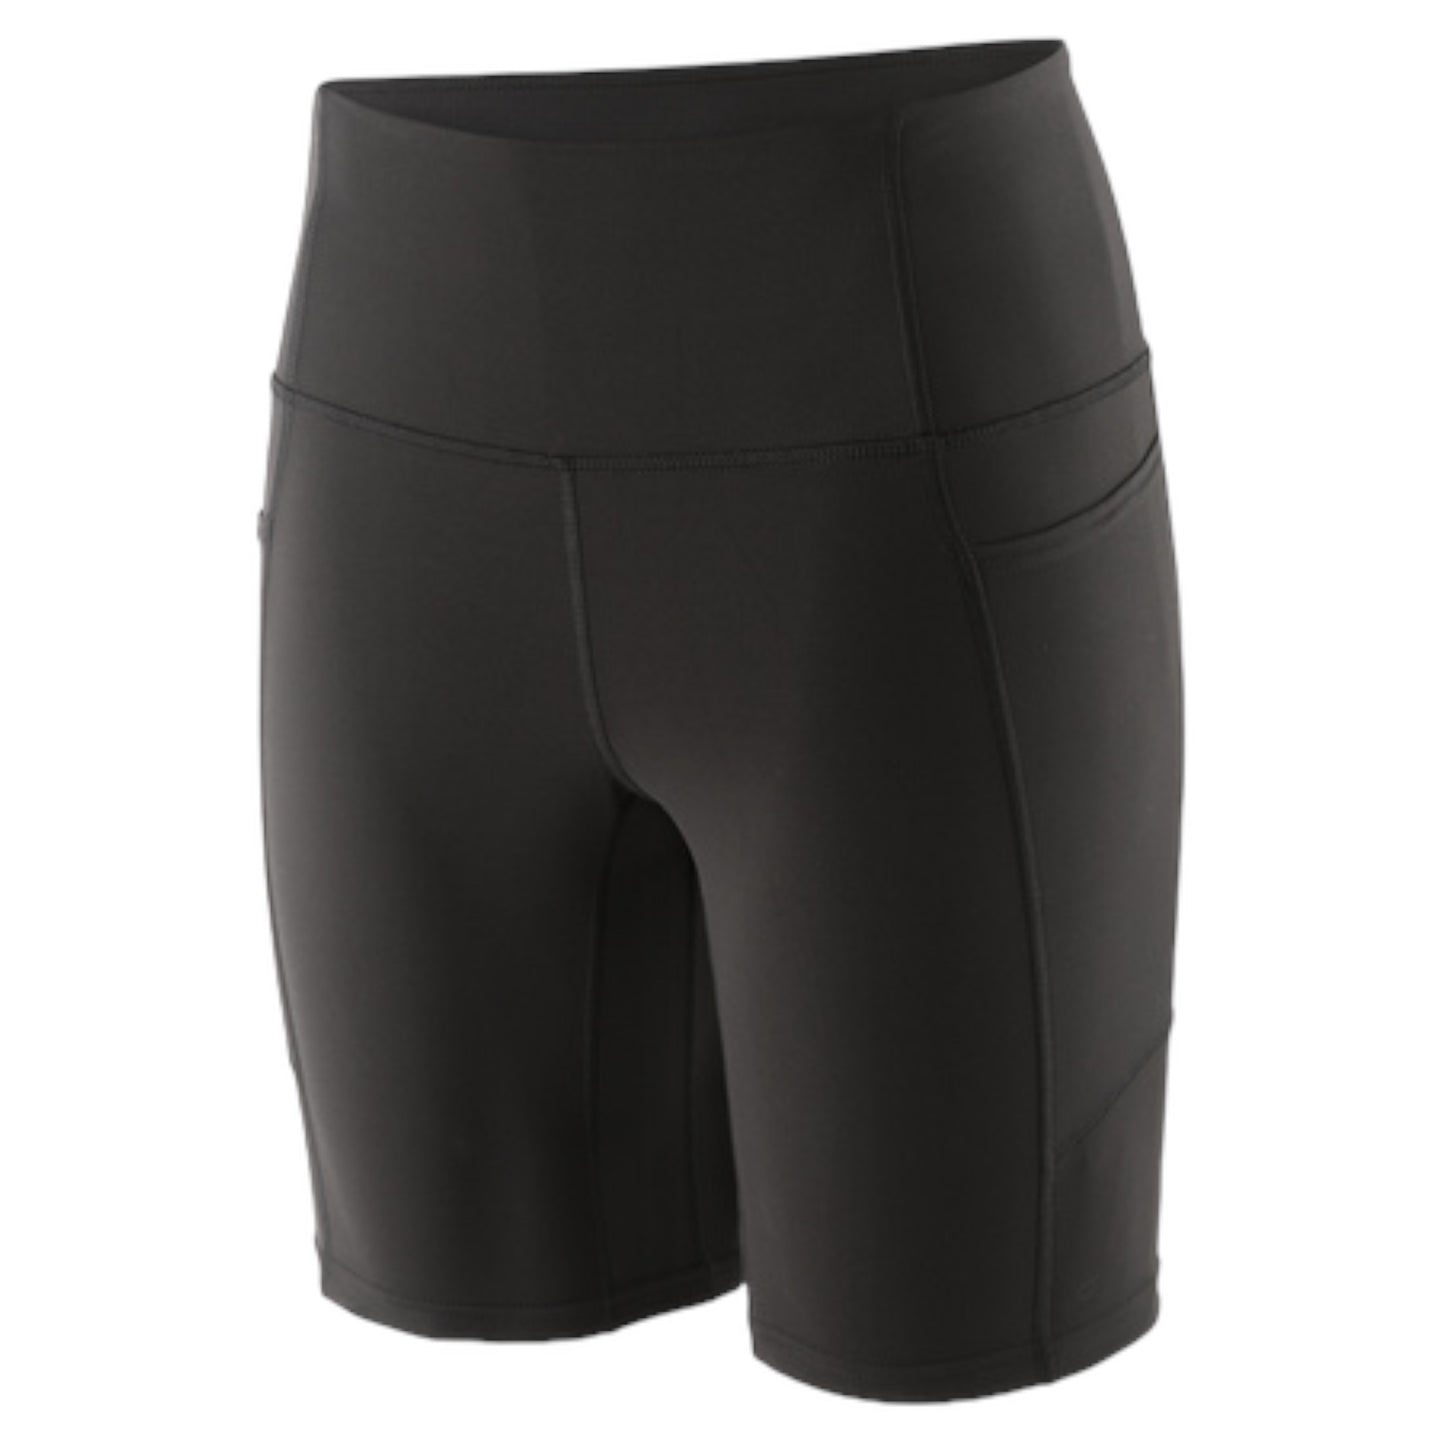 Patagonia - Women's Maipo Shorts - 8" - black - Short pour femmes